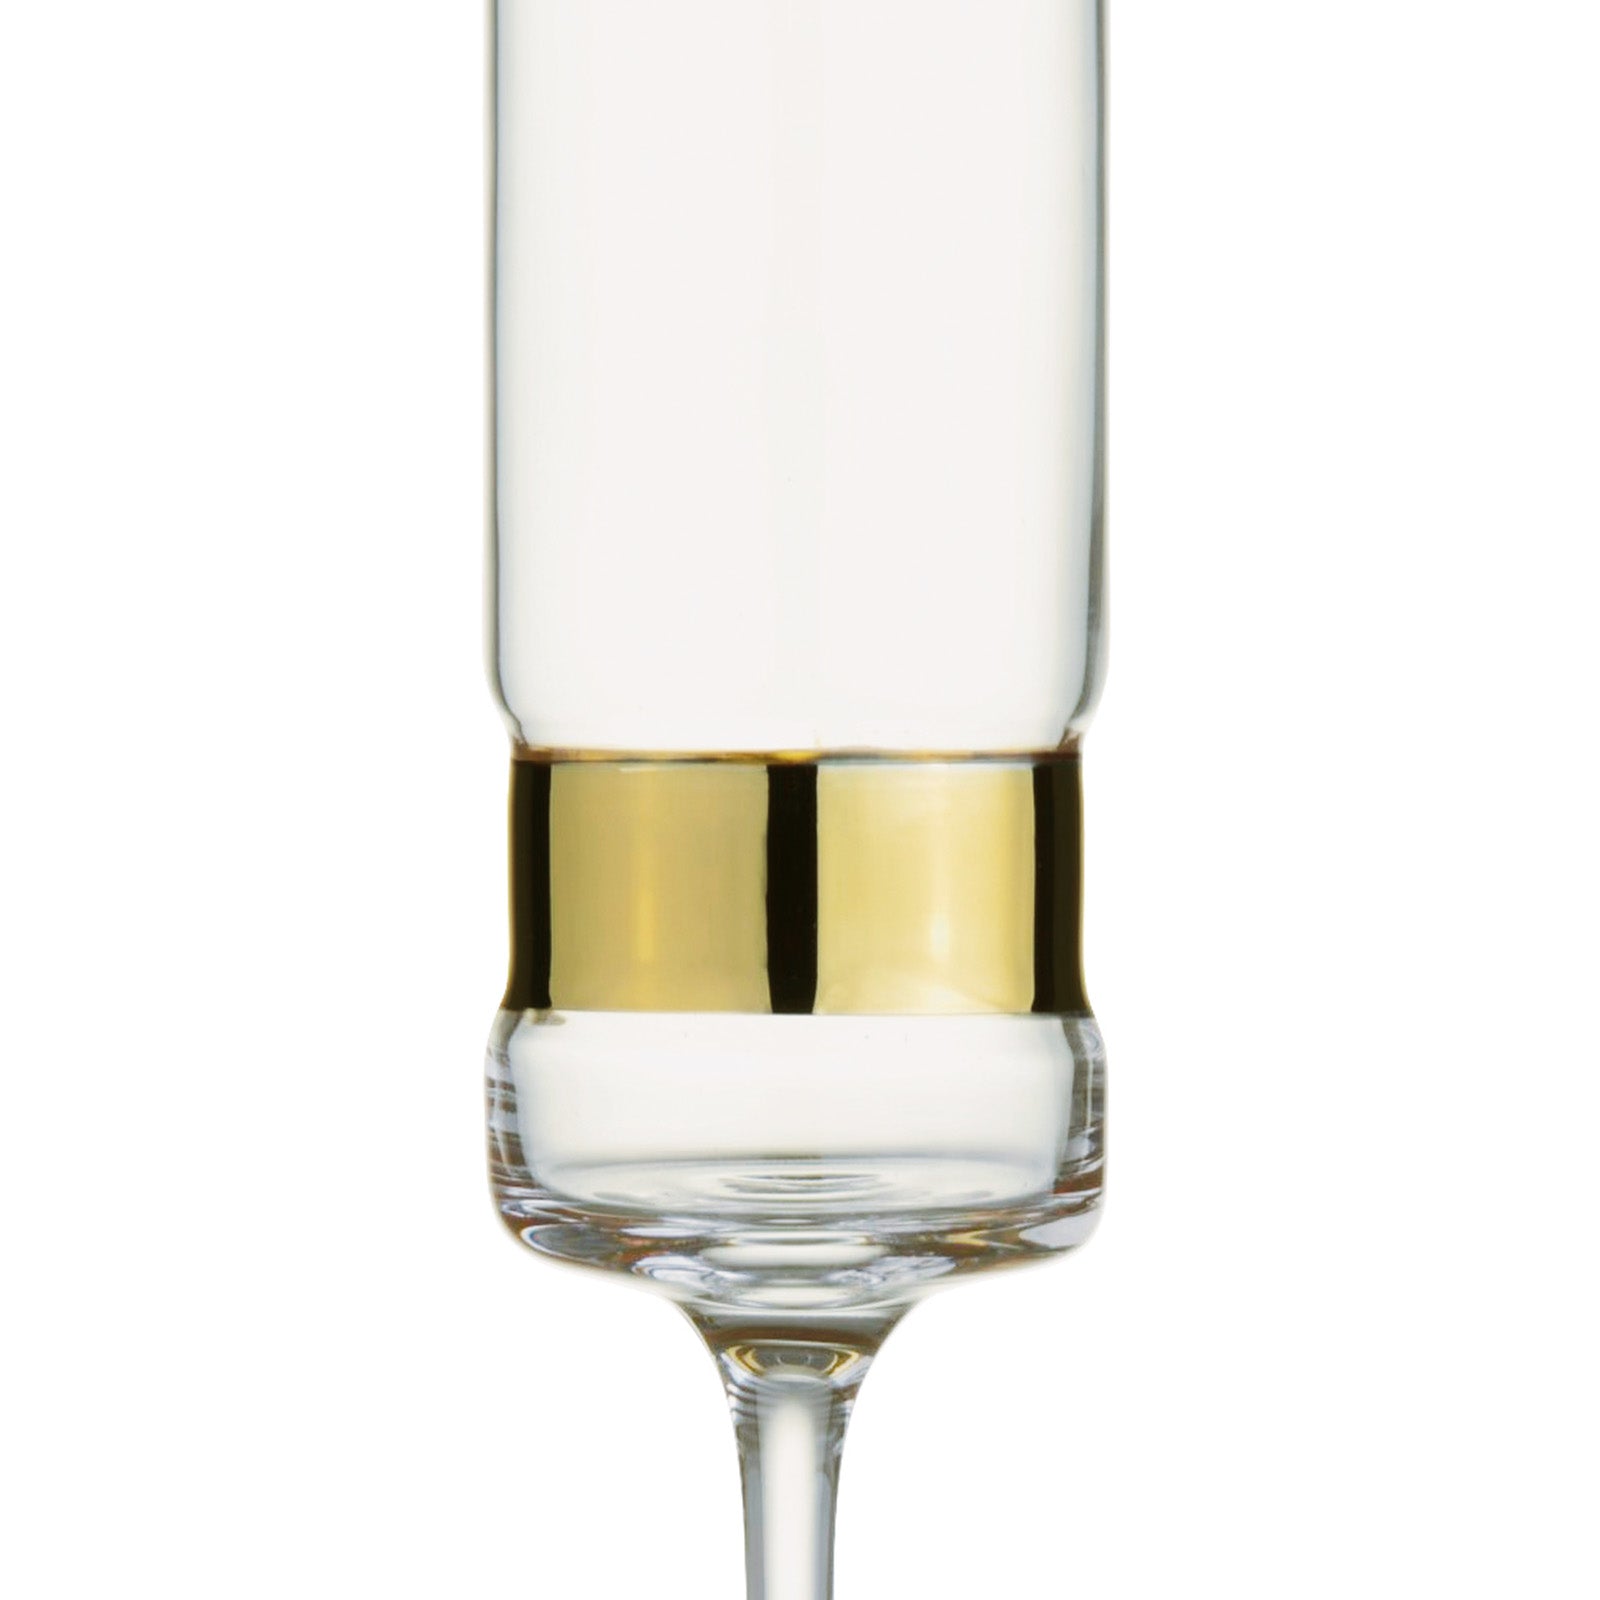 Anton Studio Designs SoHo Gold Champagne Flutes, Set of 2